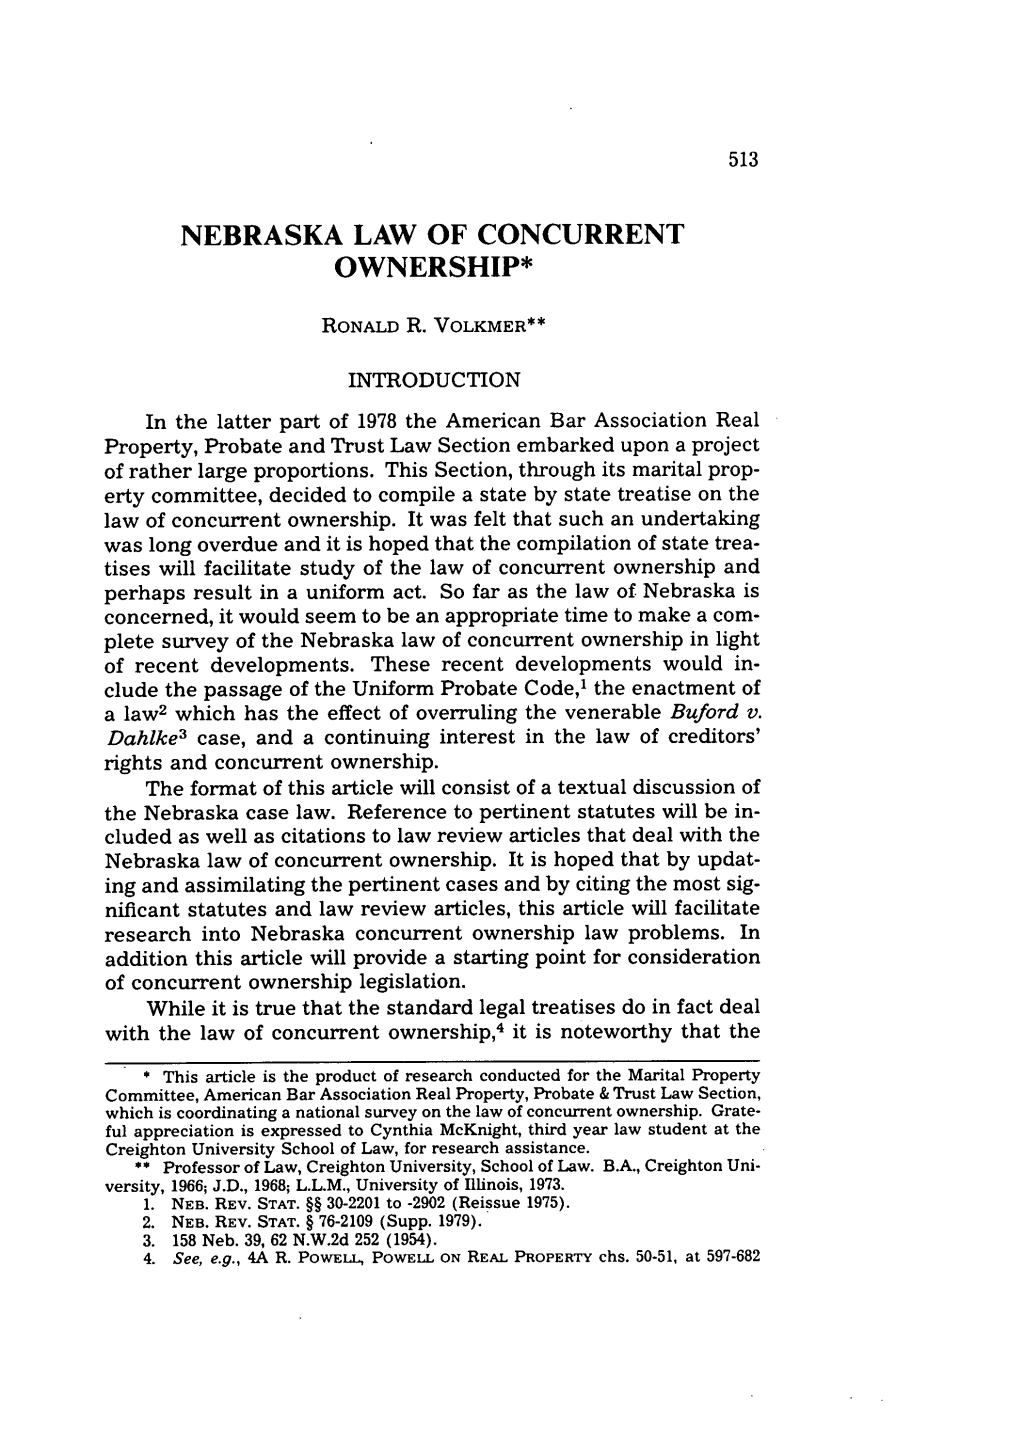 Nebraska Law of Concurrent Ownership*